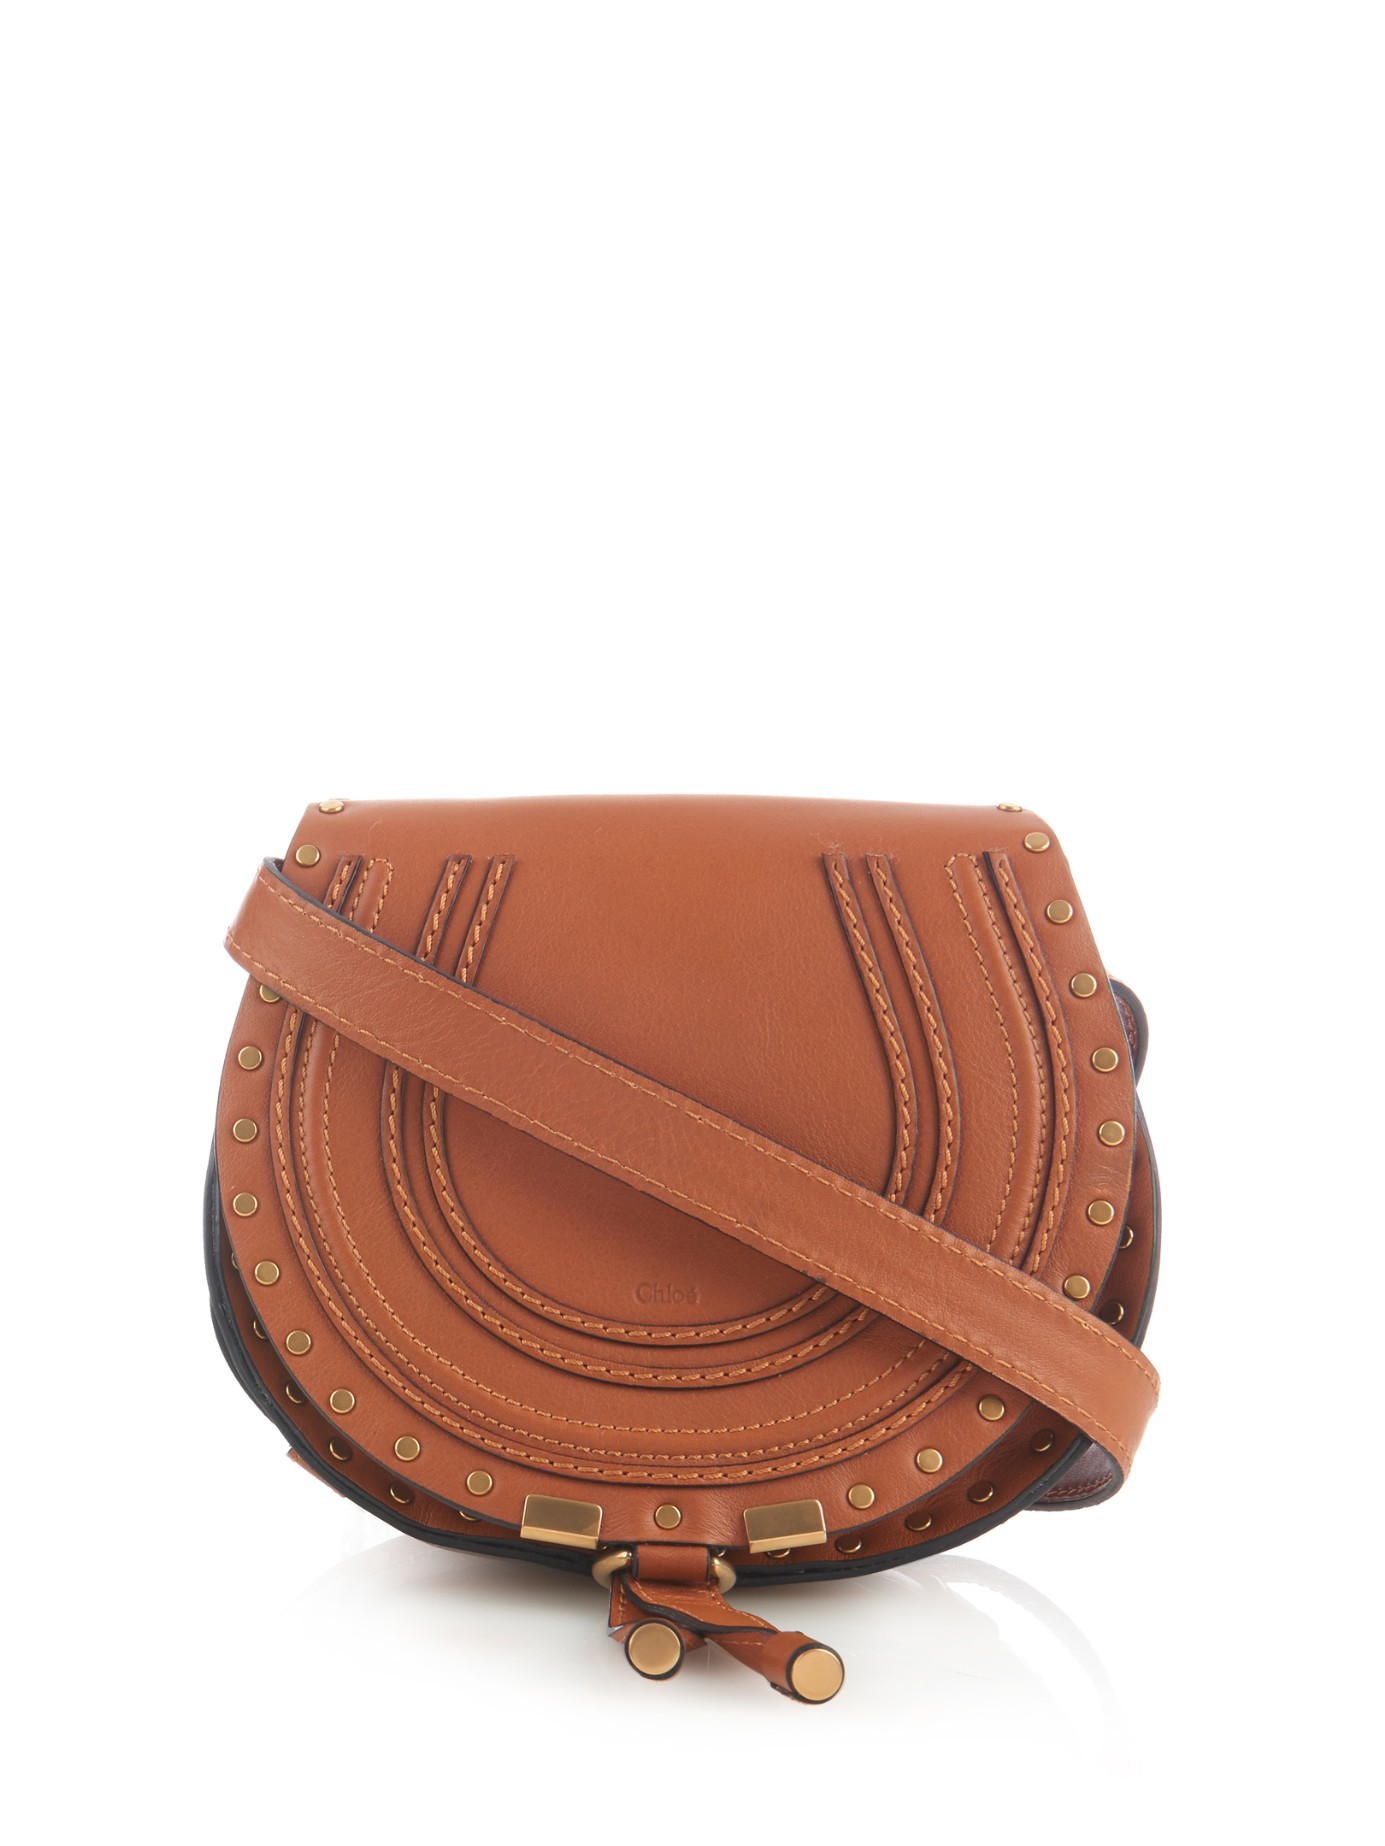 Chloé Marcie Mini Studded Leather Cross-body Bag in Brown - Lyst